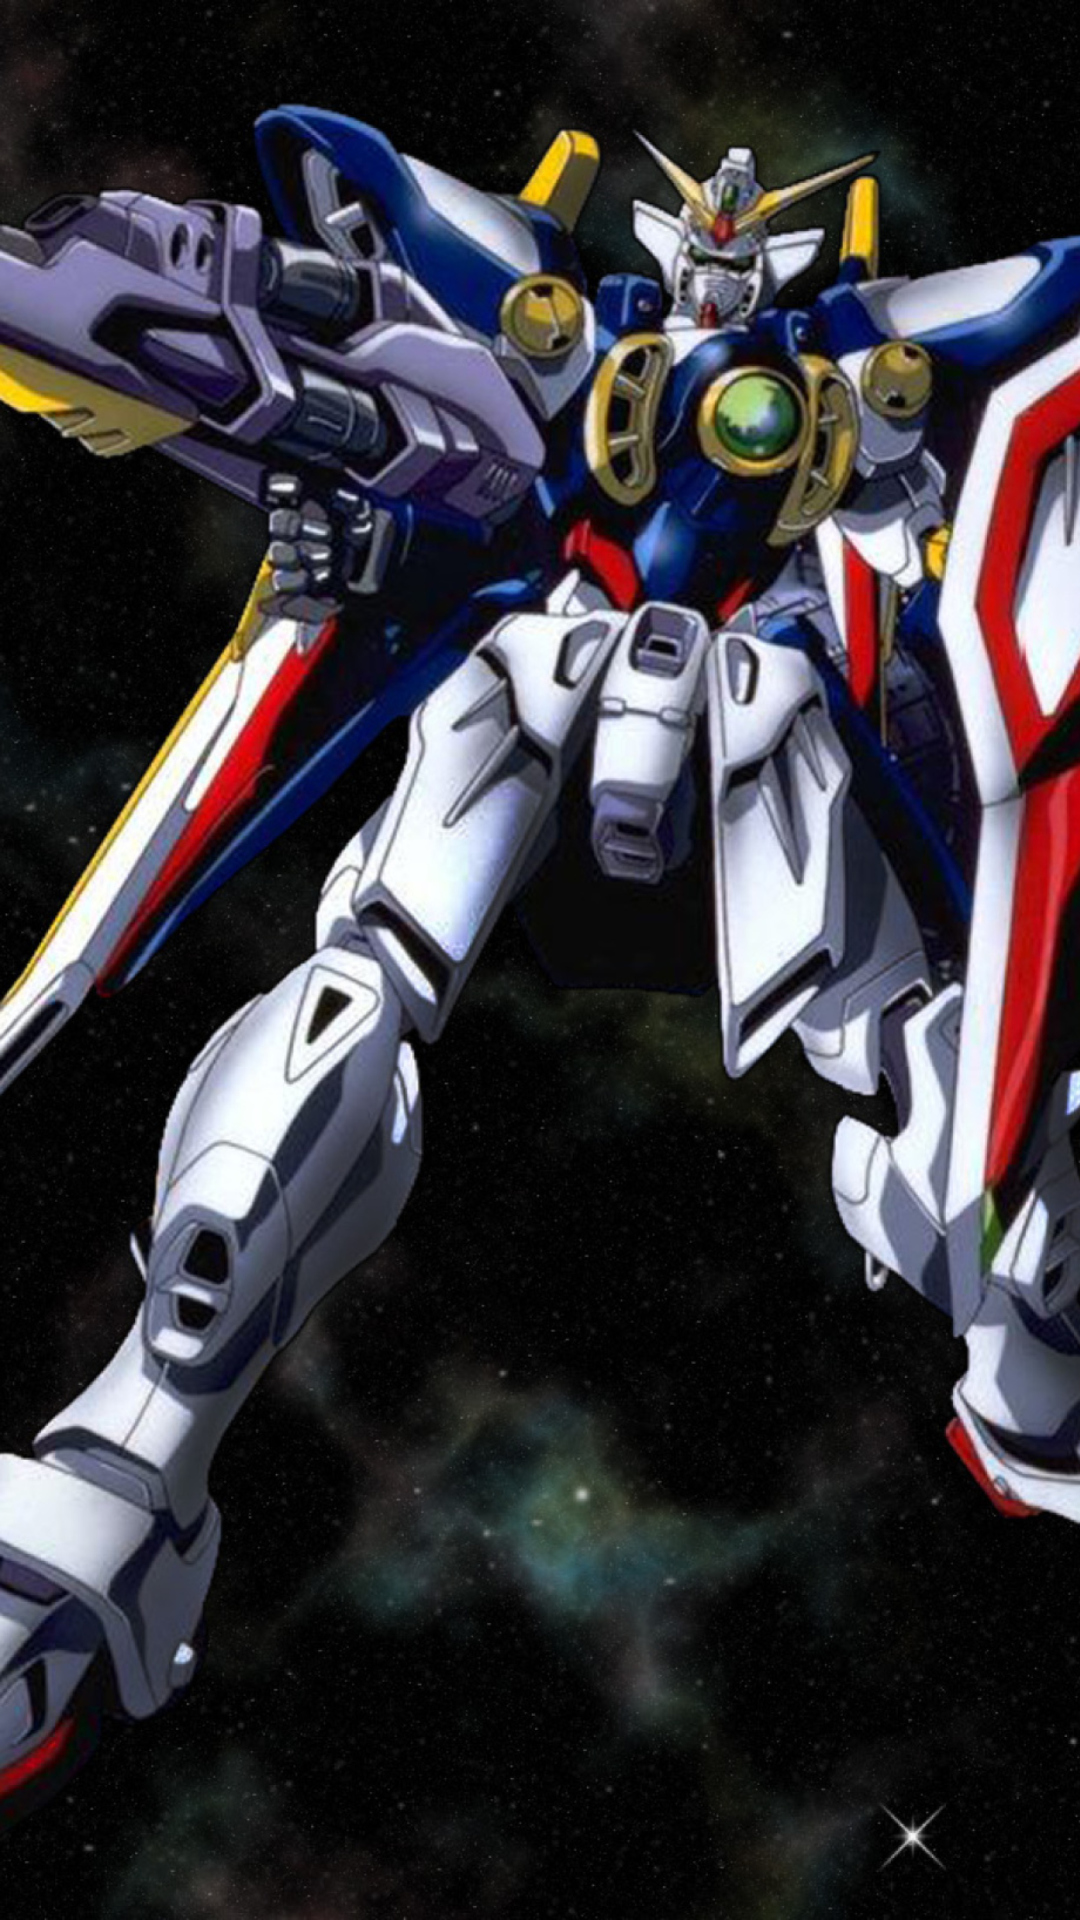 Gundam Wallpaper for iPhone 7 Plus.